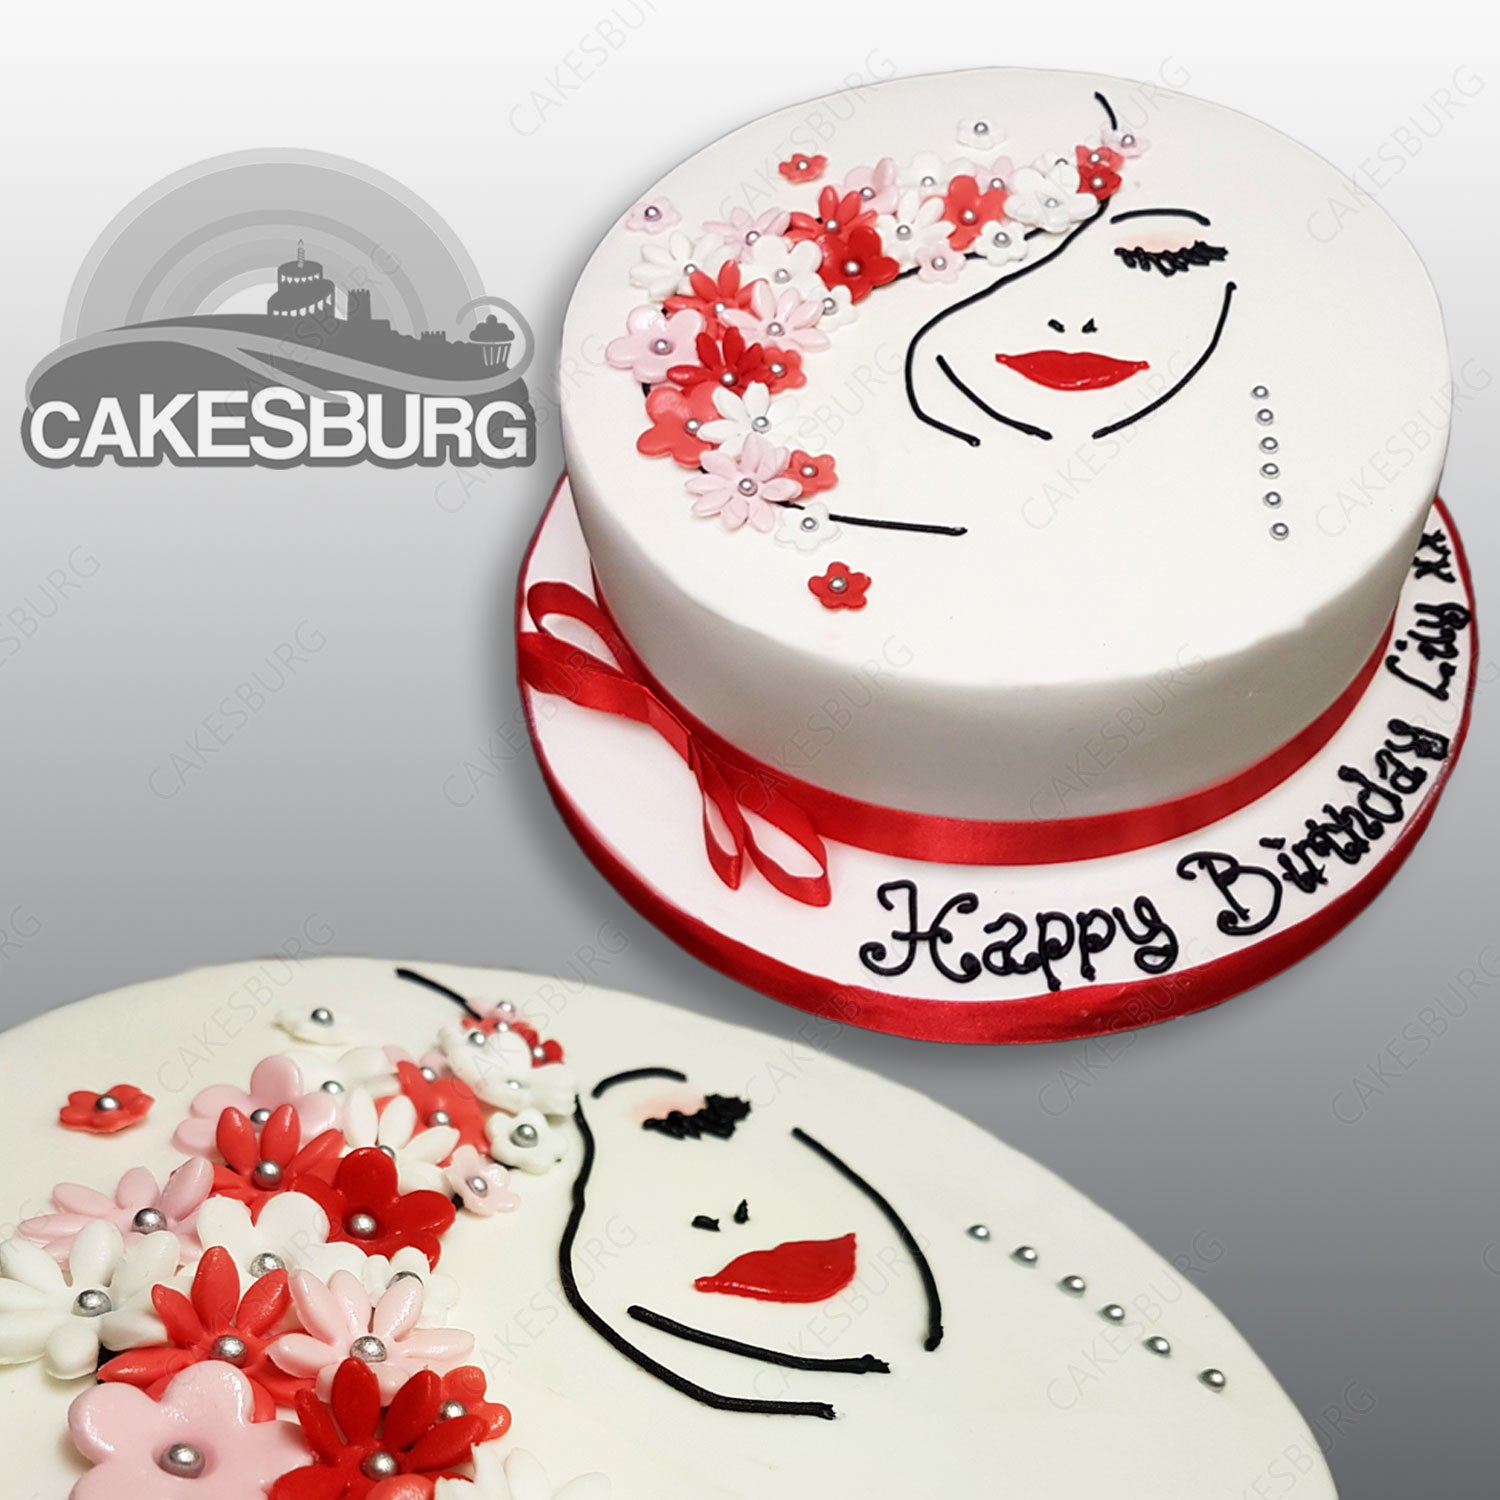 2 Tier Red Lips Fondant Cake | Kiss Day Cake